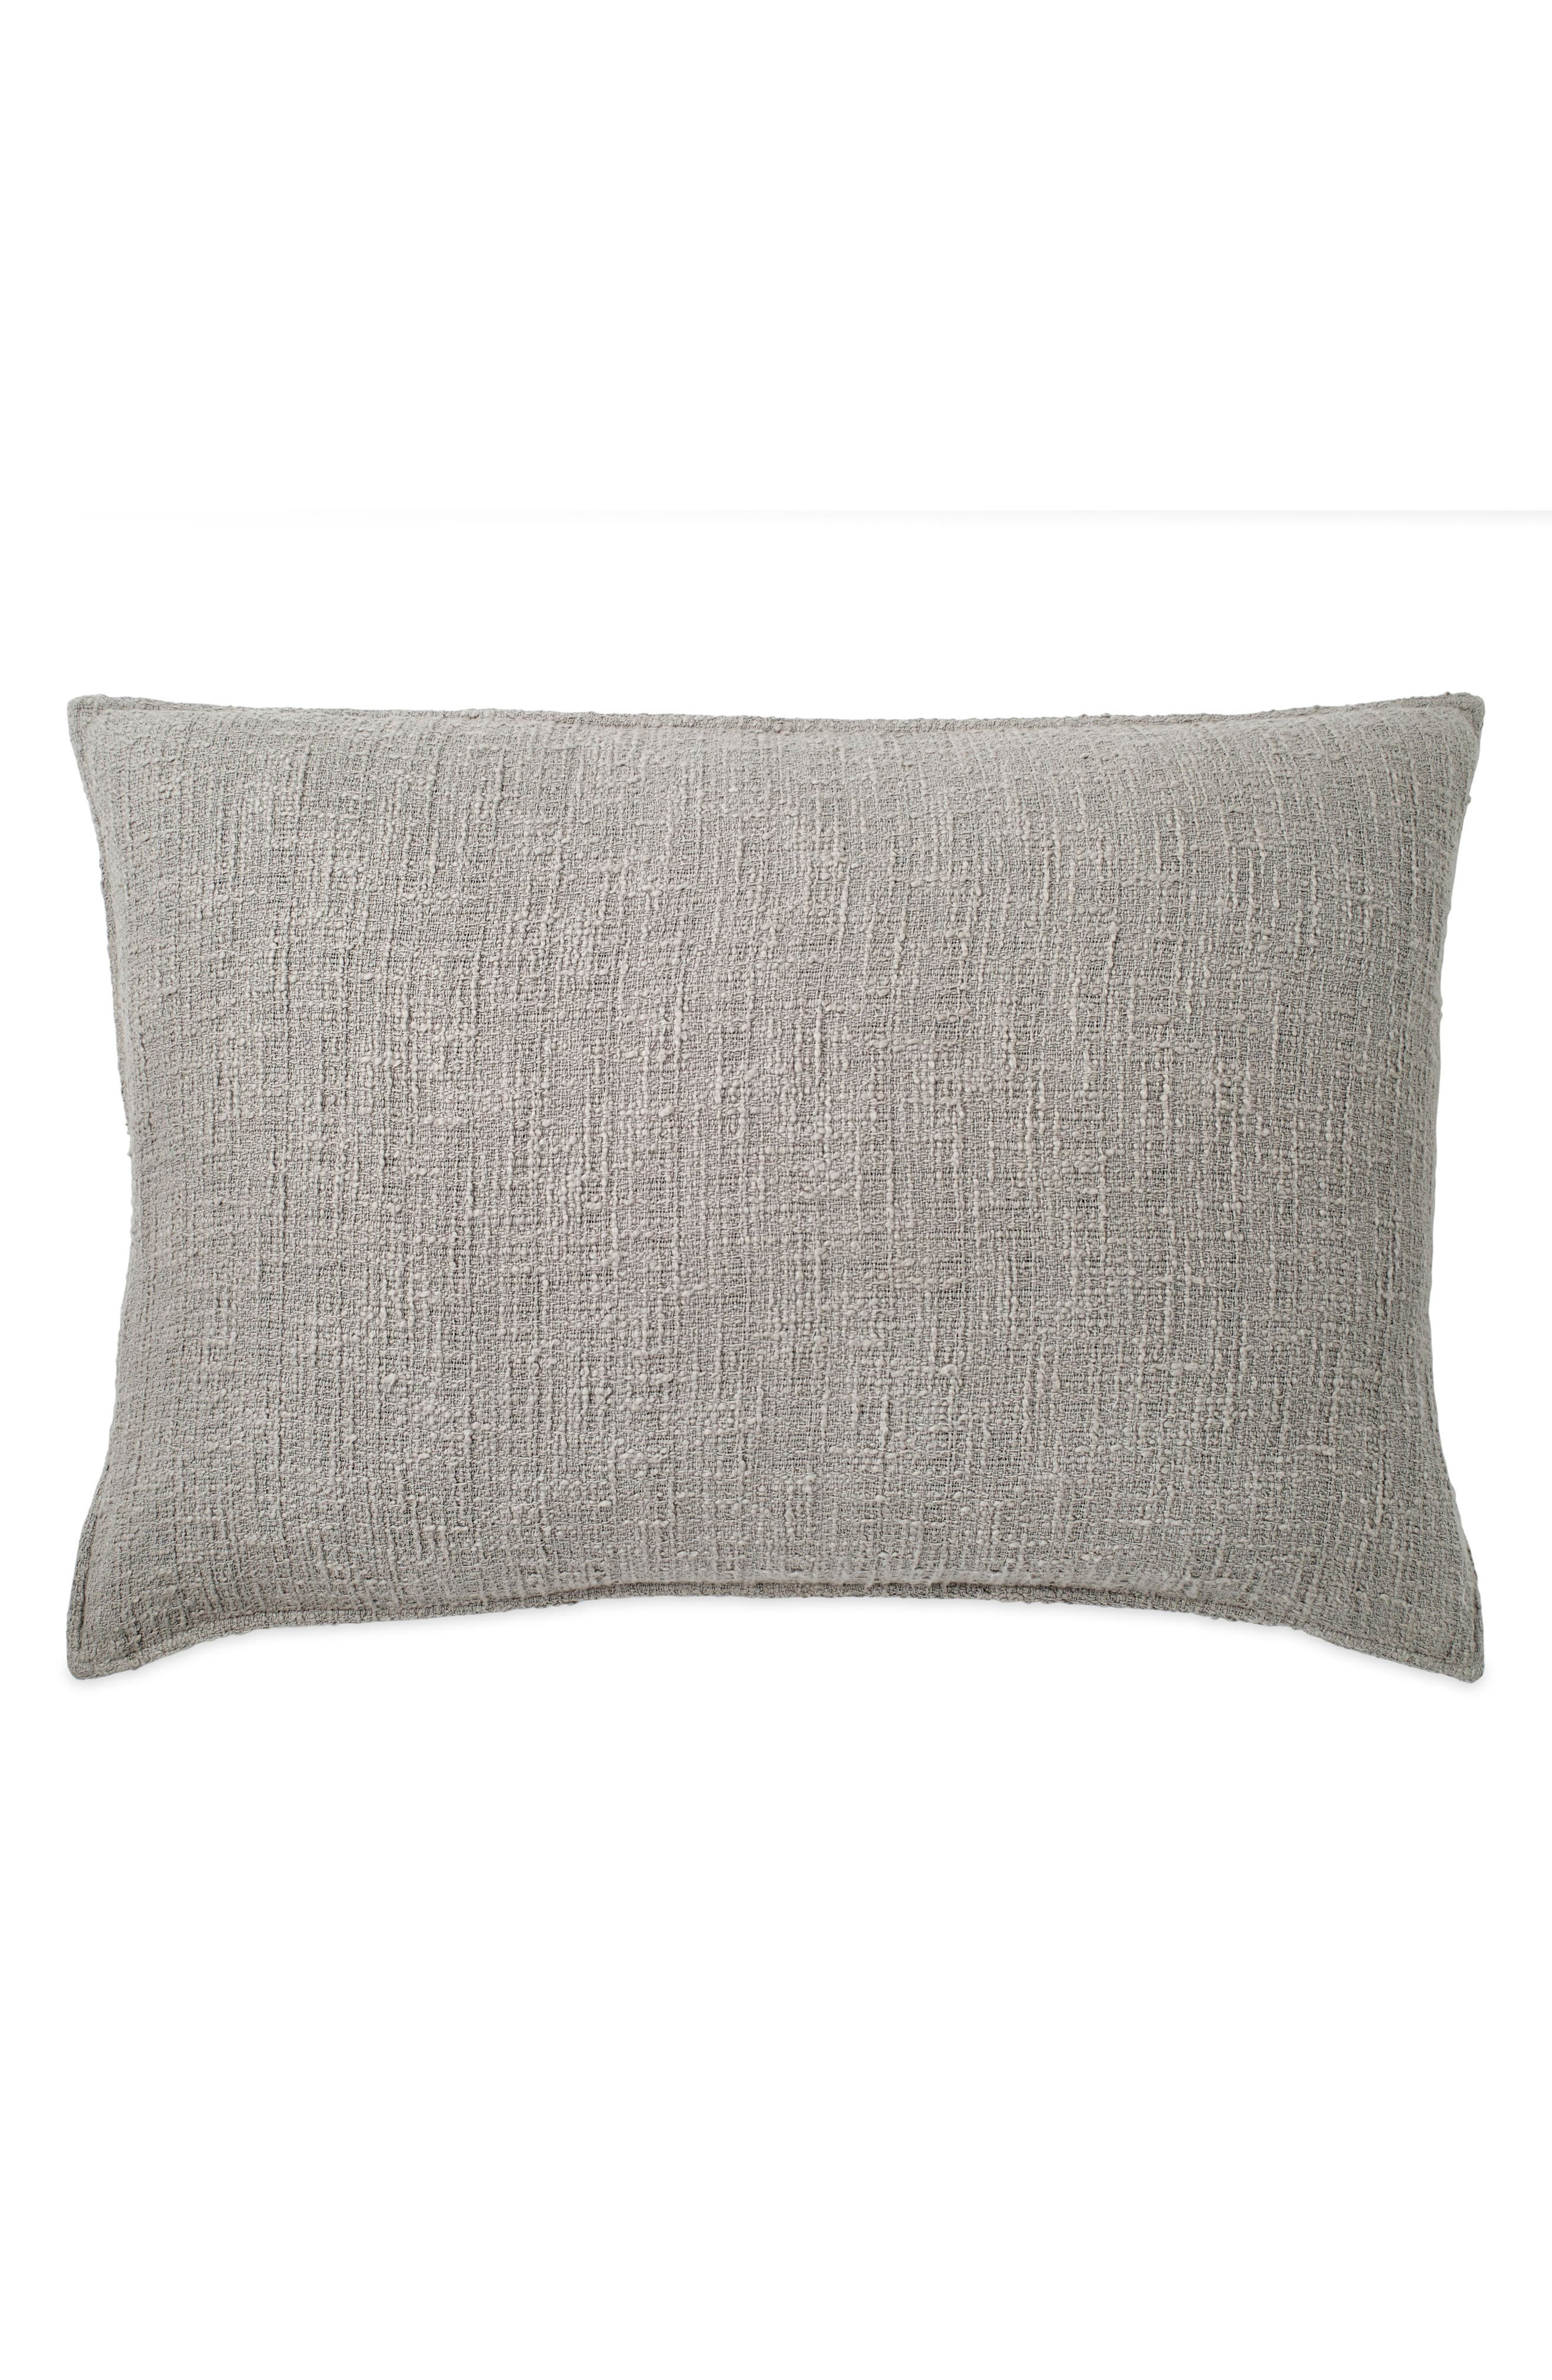 Details about   DKNY Pure Standard/Queen Pillow Sham Cotton Textural Detail Pure Texture Pink 